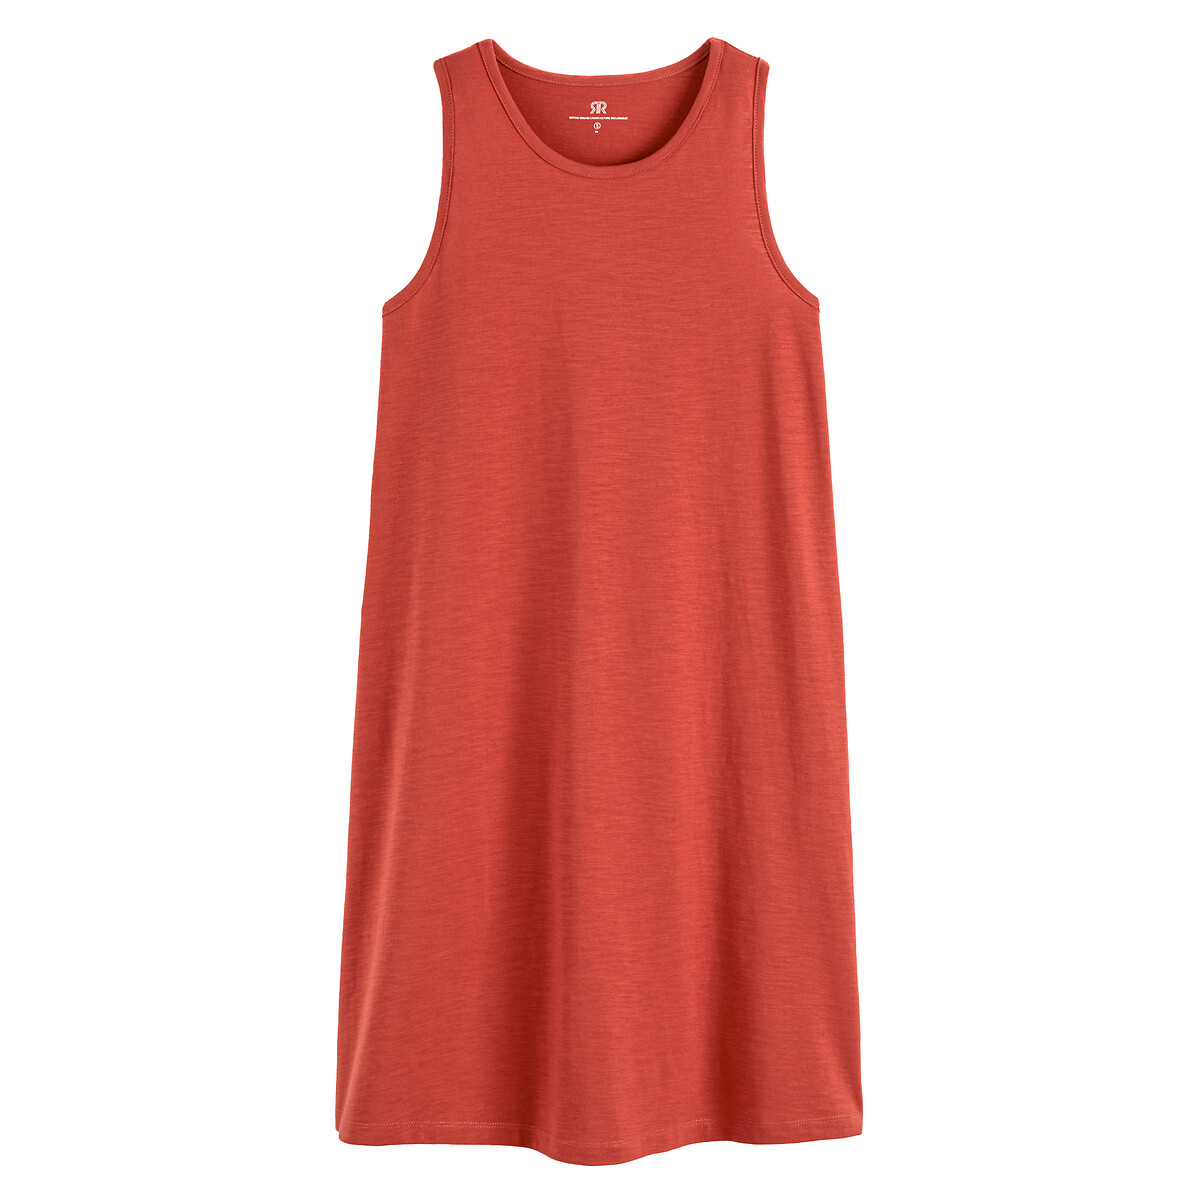 Платье Короткое без рукавов из трикотажа S красный LaRedoute, размер S - фото 5